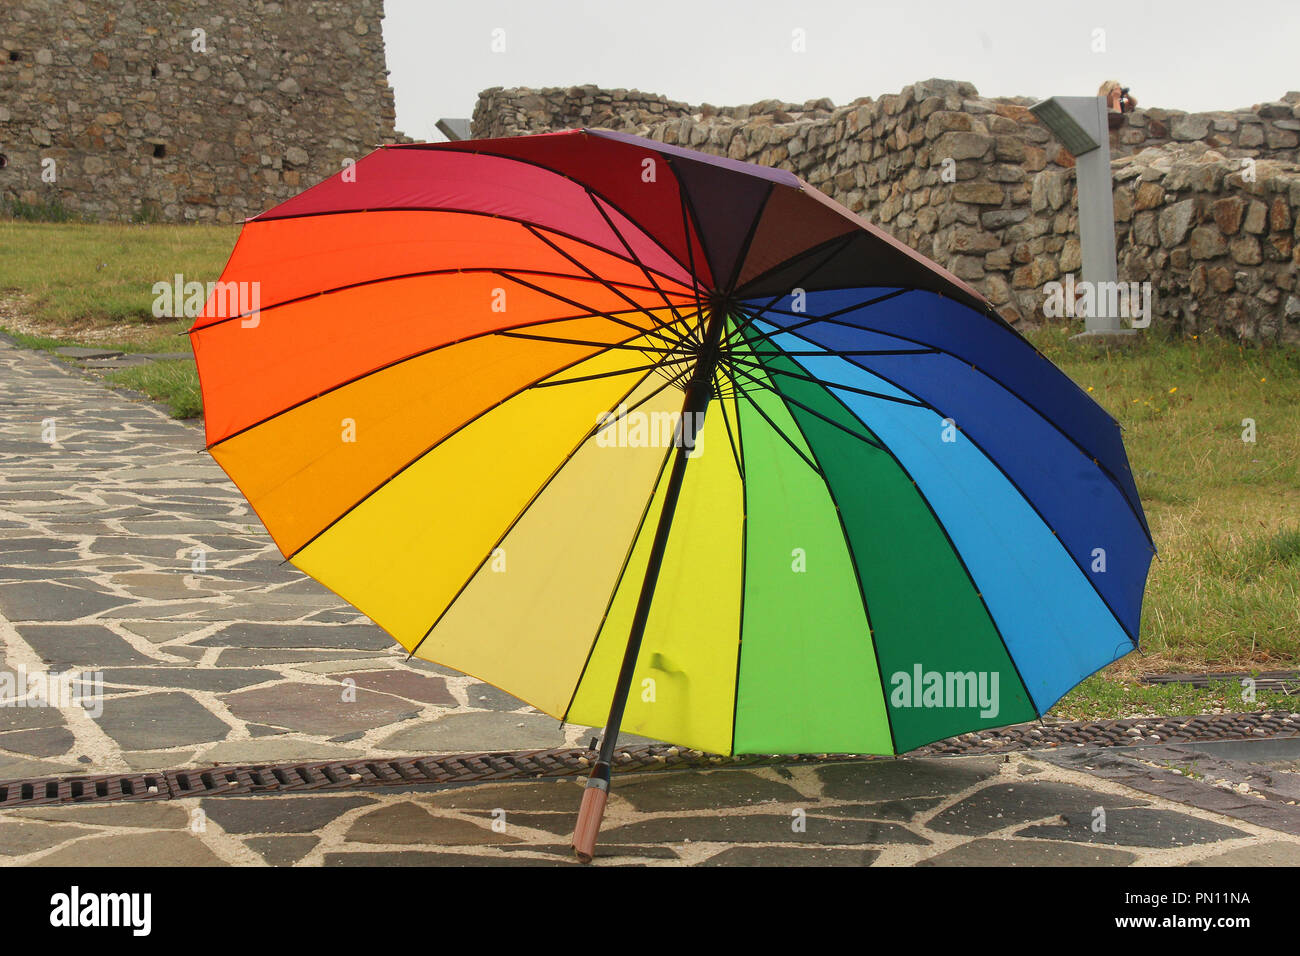 أخبار عاجلة غادر التسجيل Colourful Umbrella Images Psidiagnosticins Com